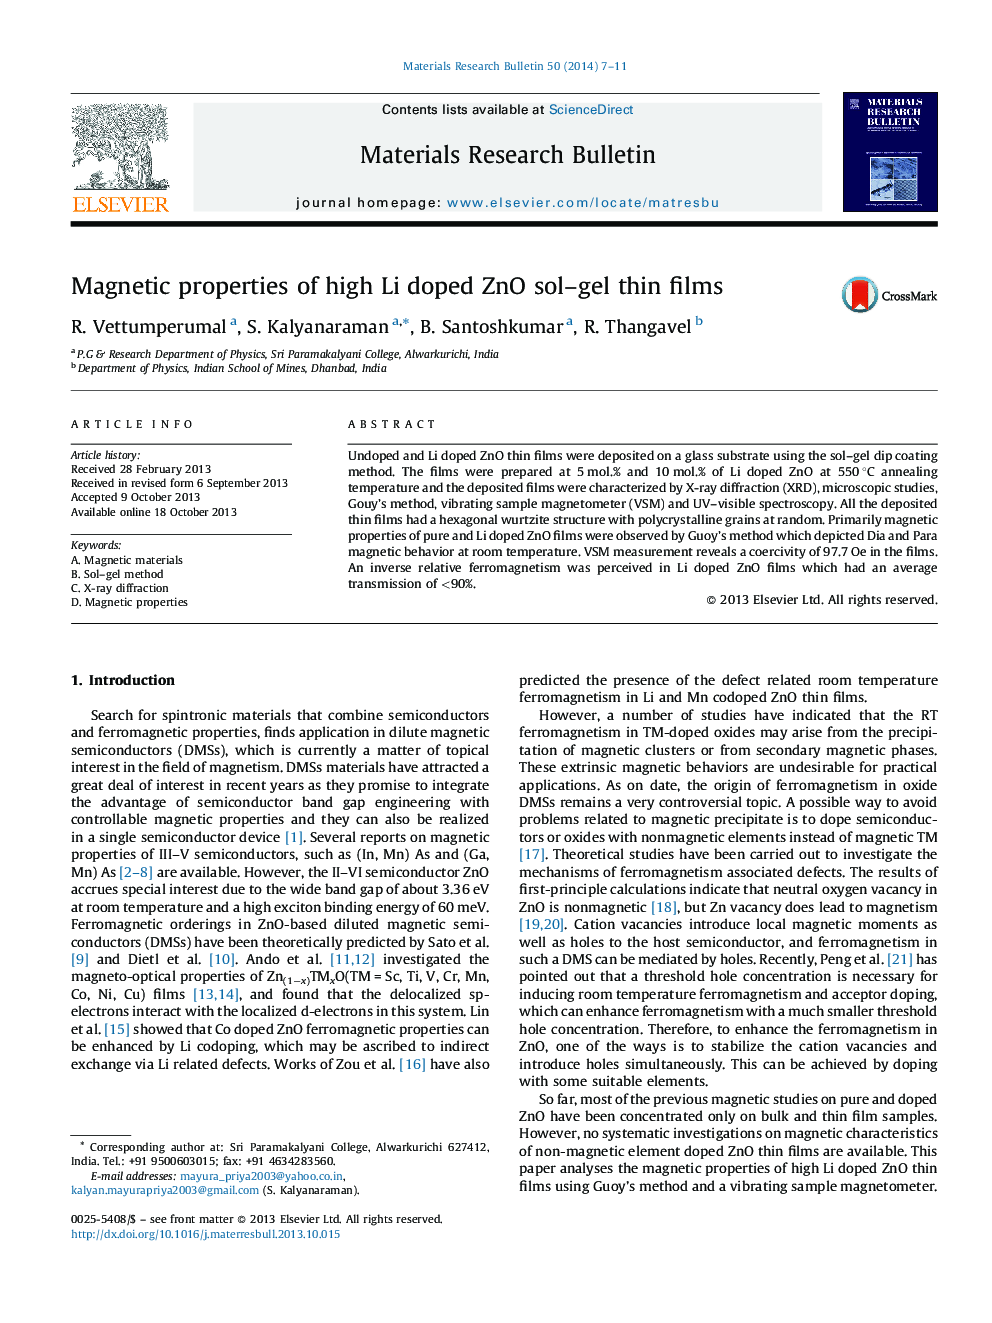 Magnetic properties of high Li doped ZnO sol–gel thin films